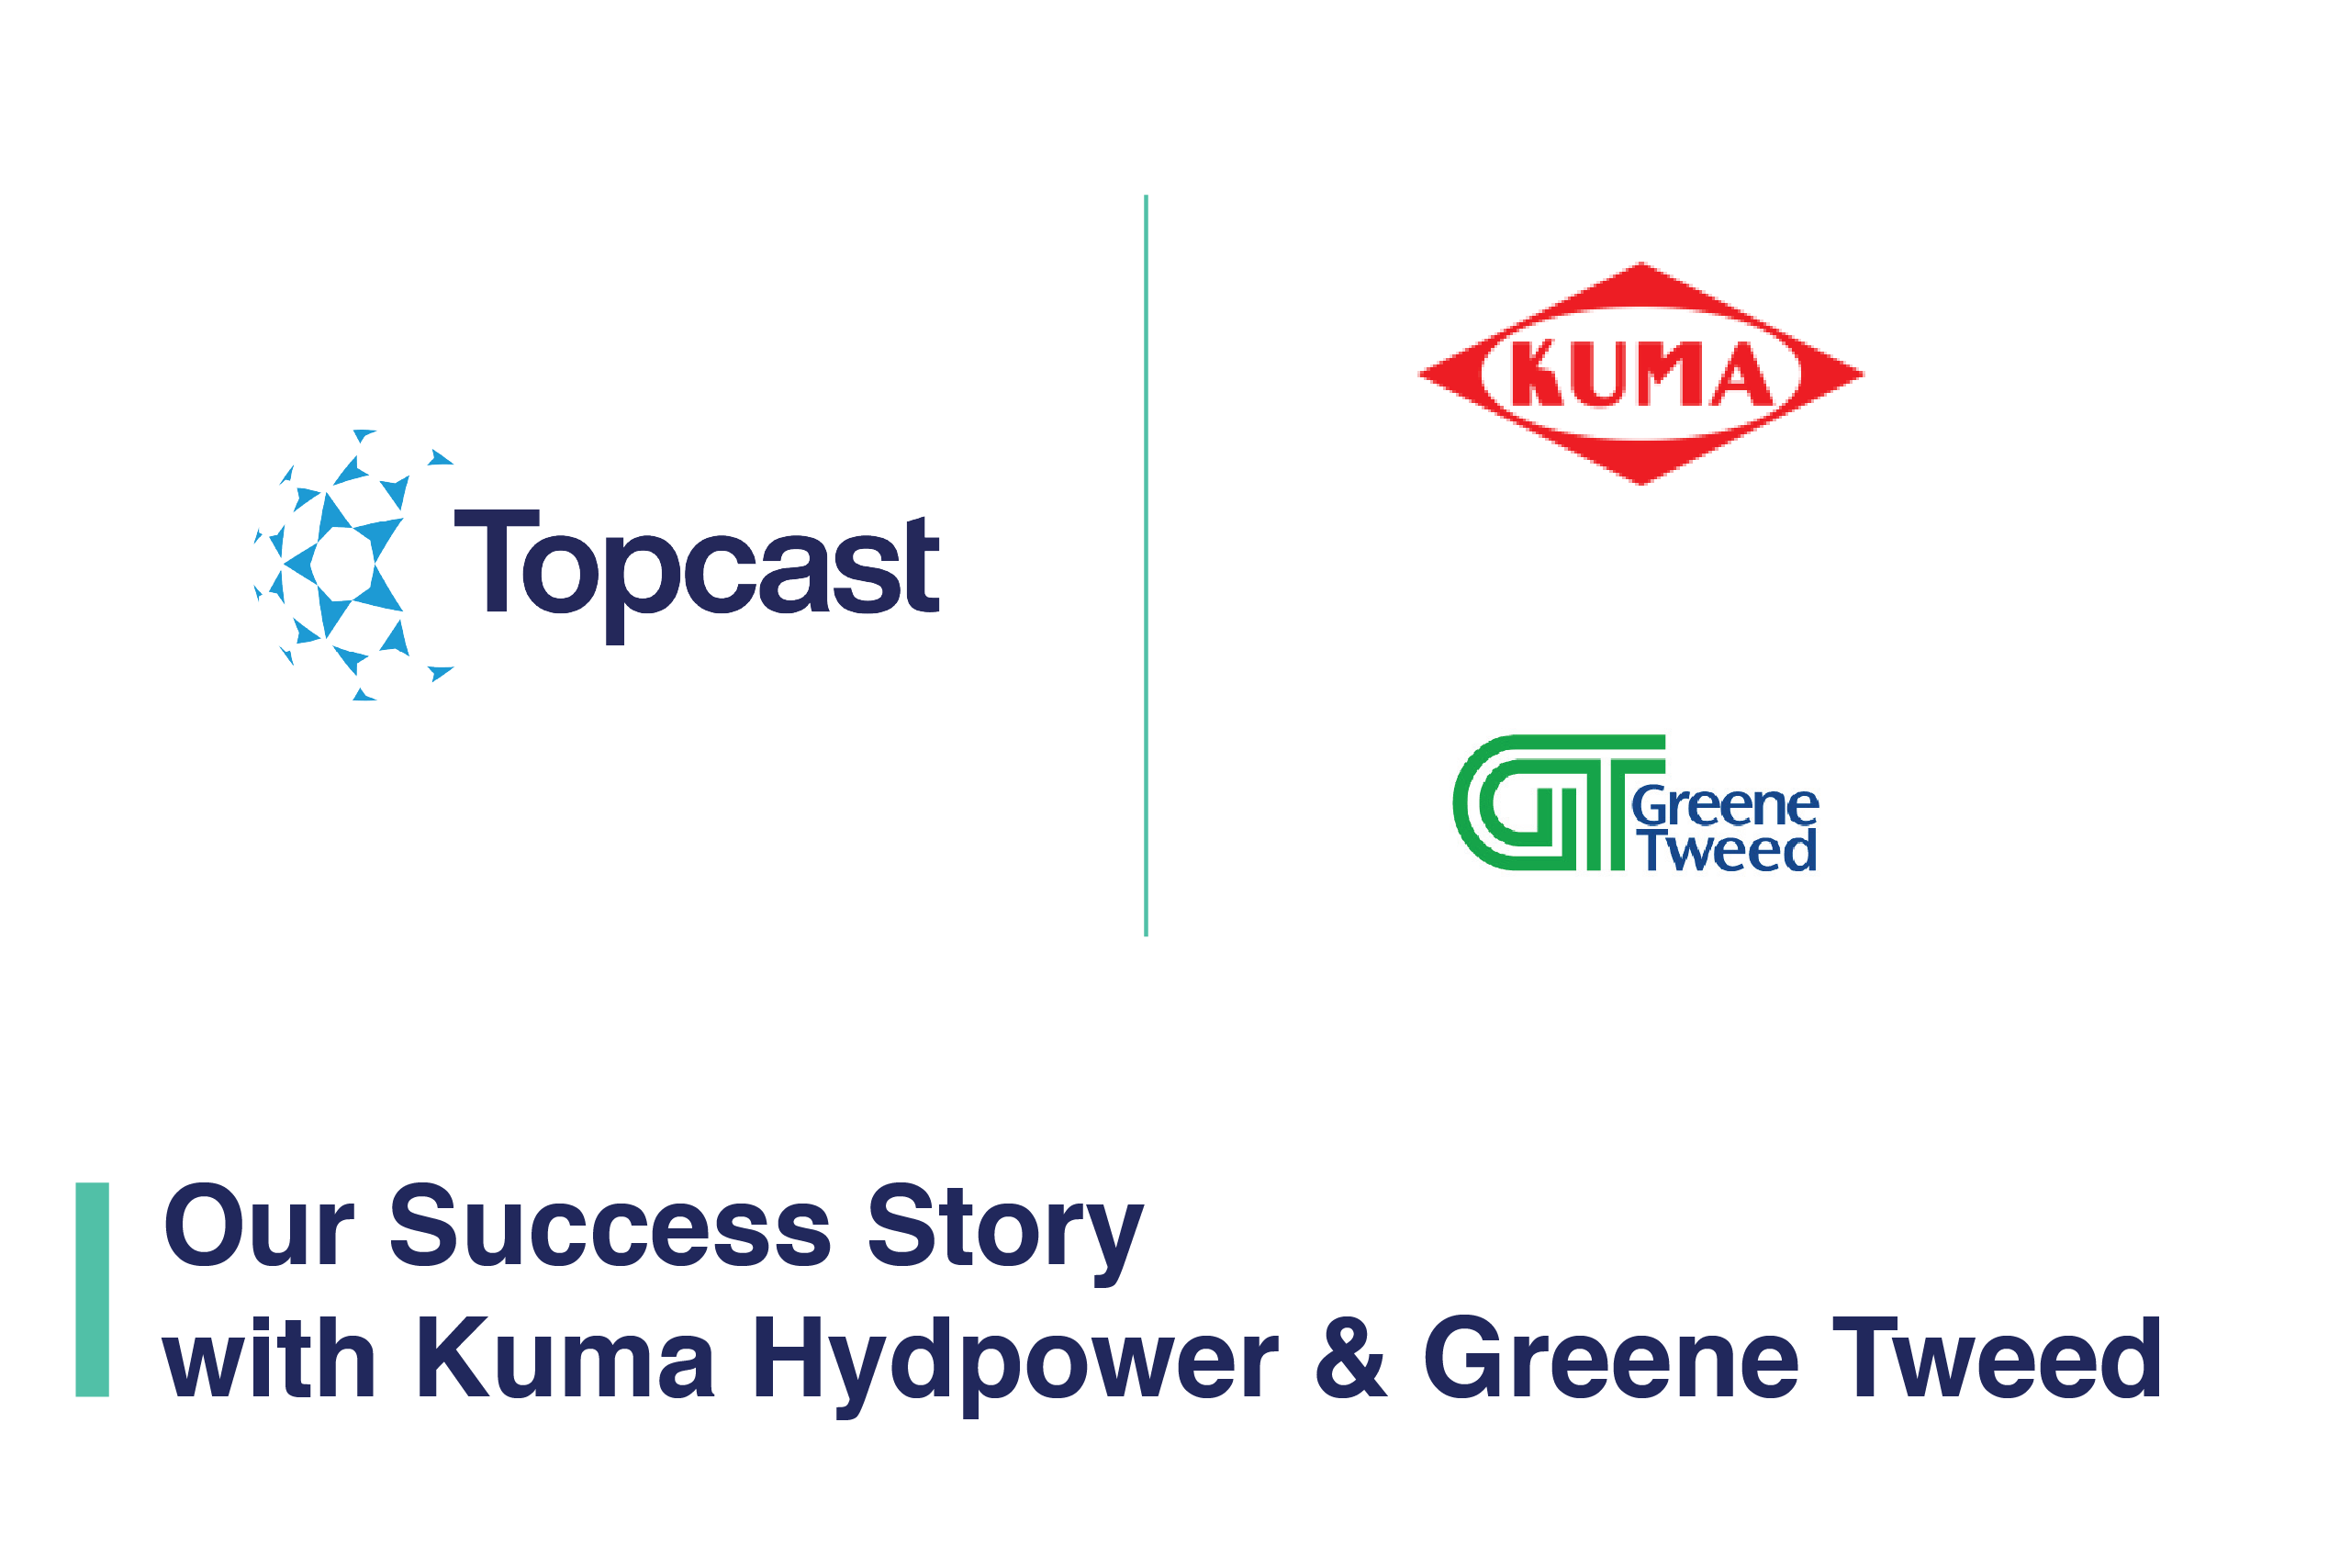 Our Success Story – Business with Kuma Hydpower & Greene Tweed